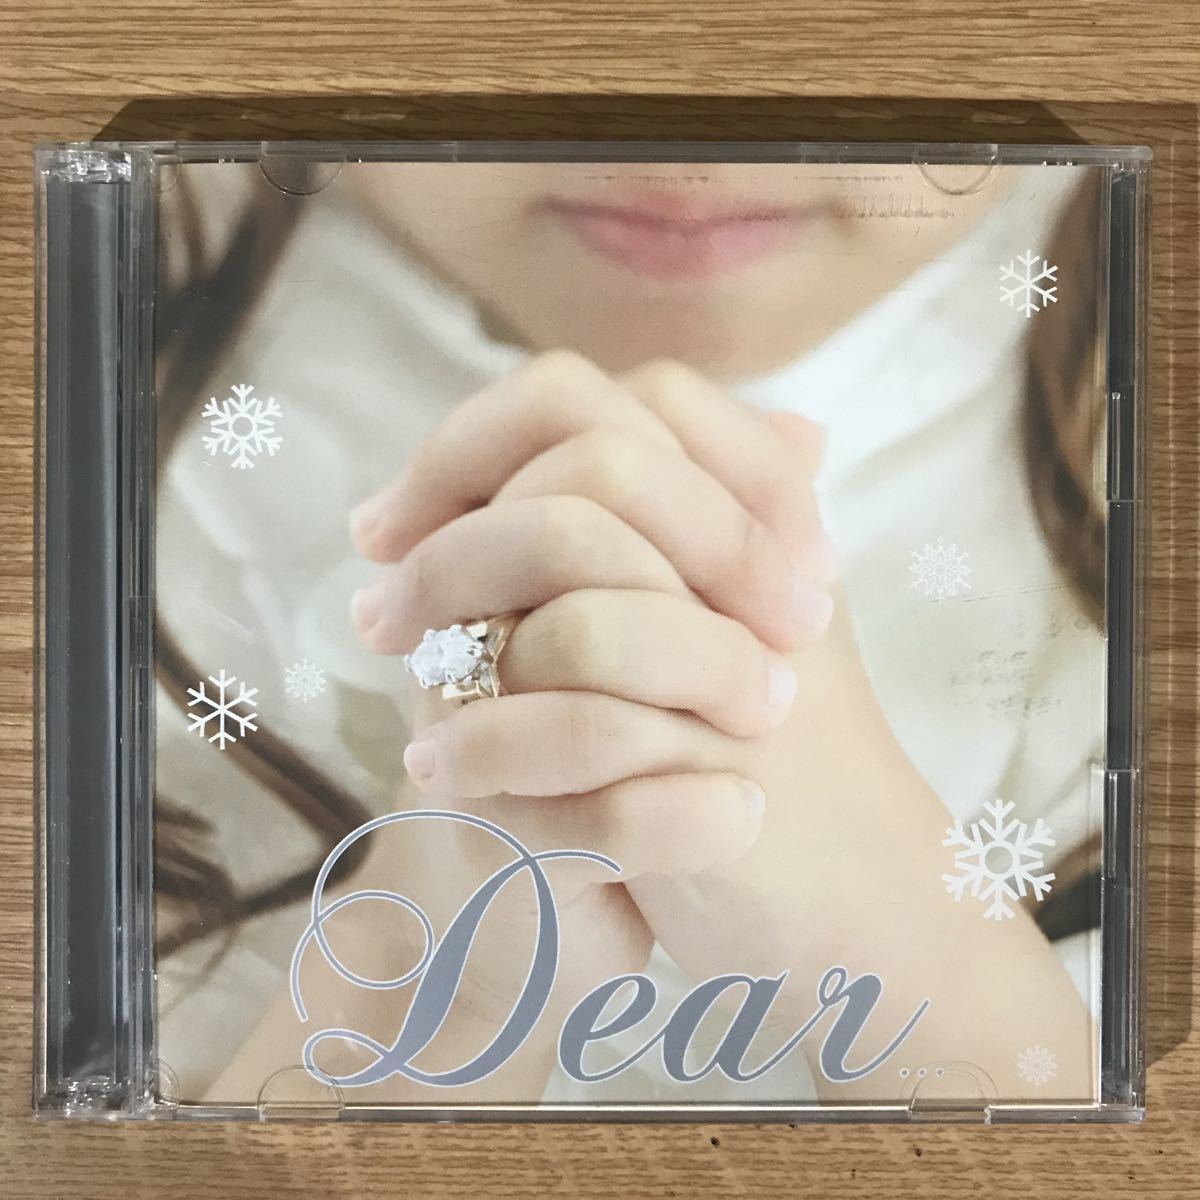 (D128)中古CD100円 CLIFF EDGE & MAY'S Dear...(DVD付)_画像1